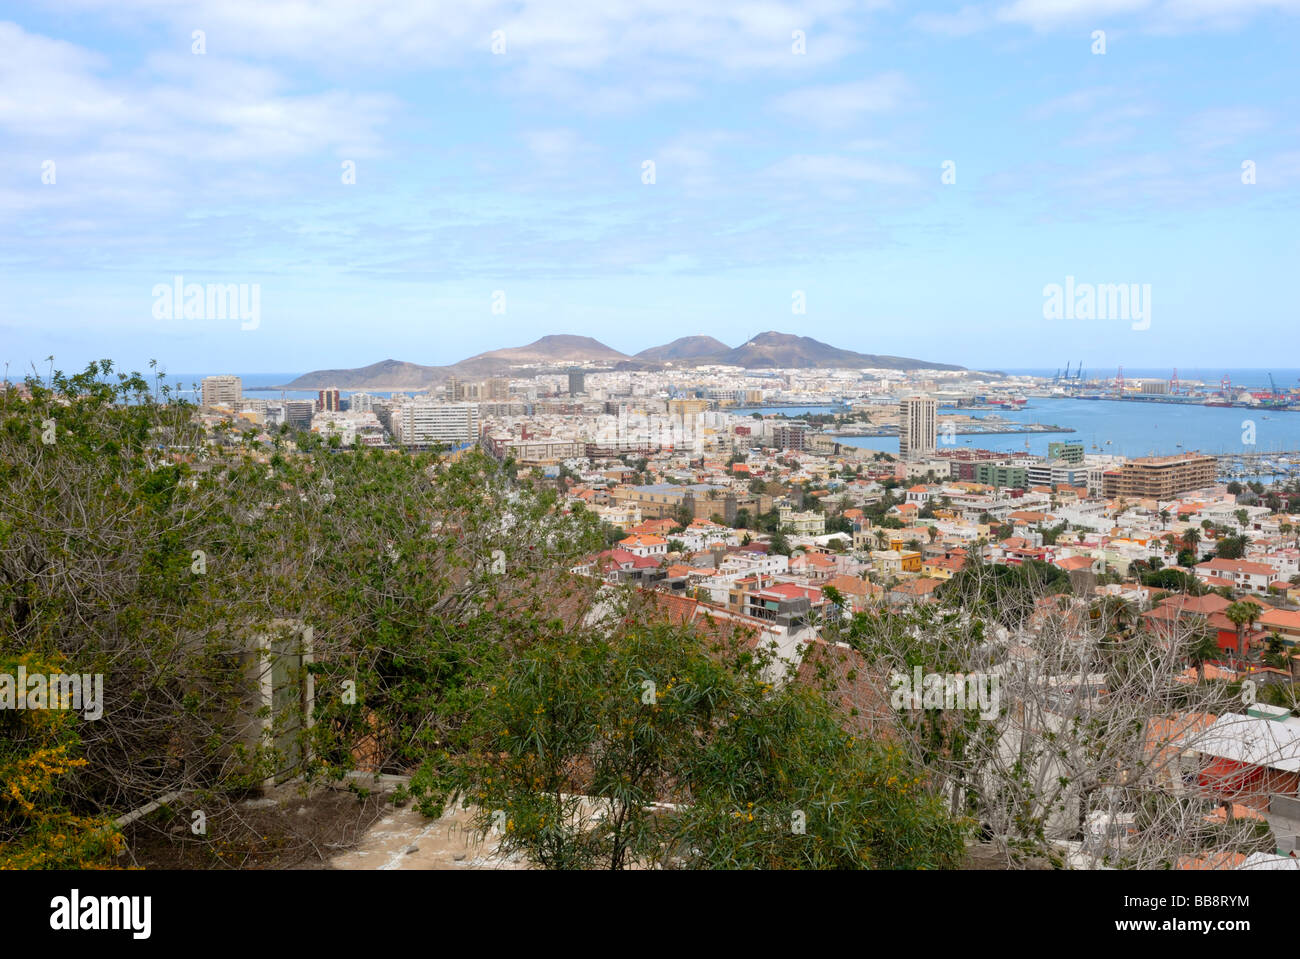 A fine view over the city of Las Palmas. Las Palmas, Gran Canaria, Canary Islands, Spain, Europe. Stock Photo